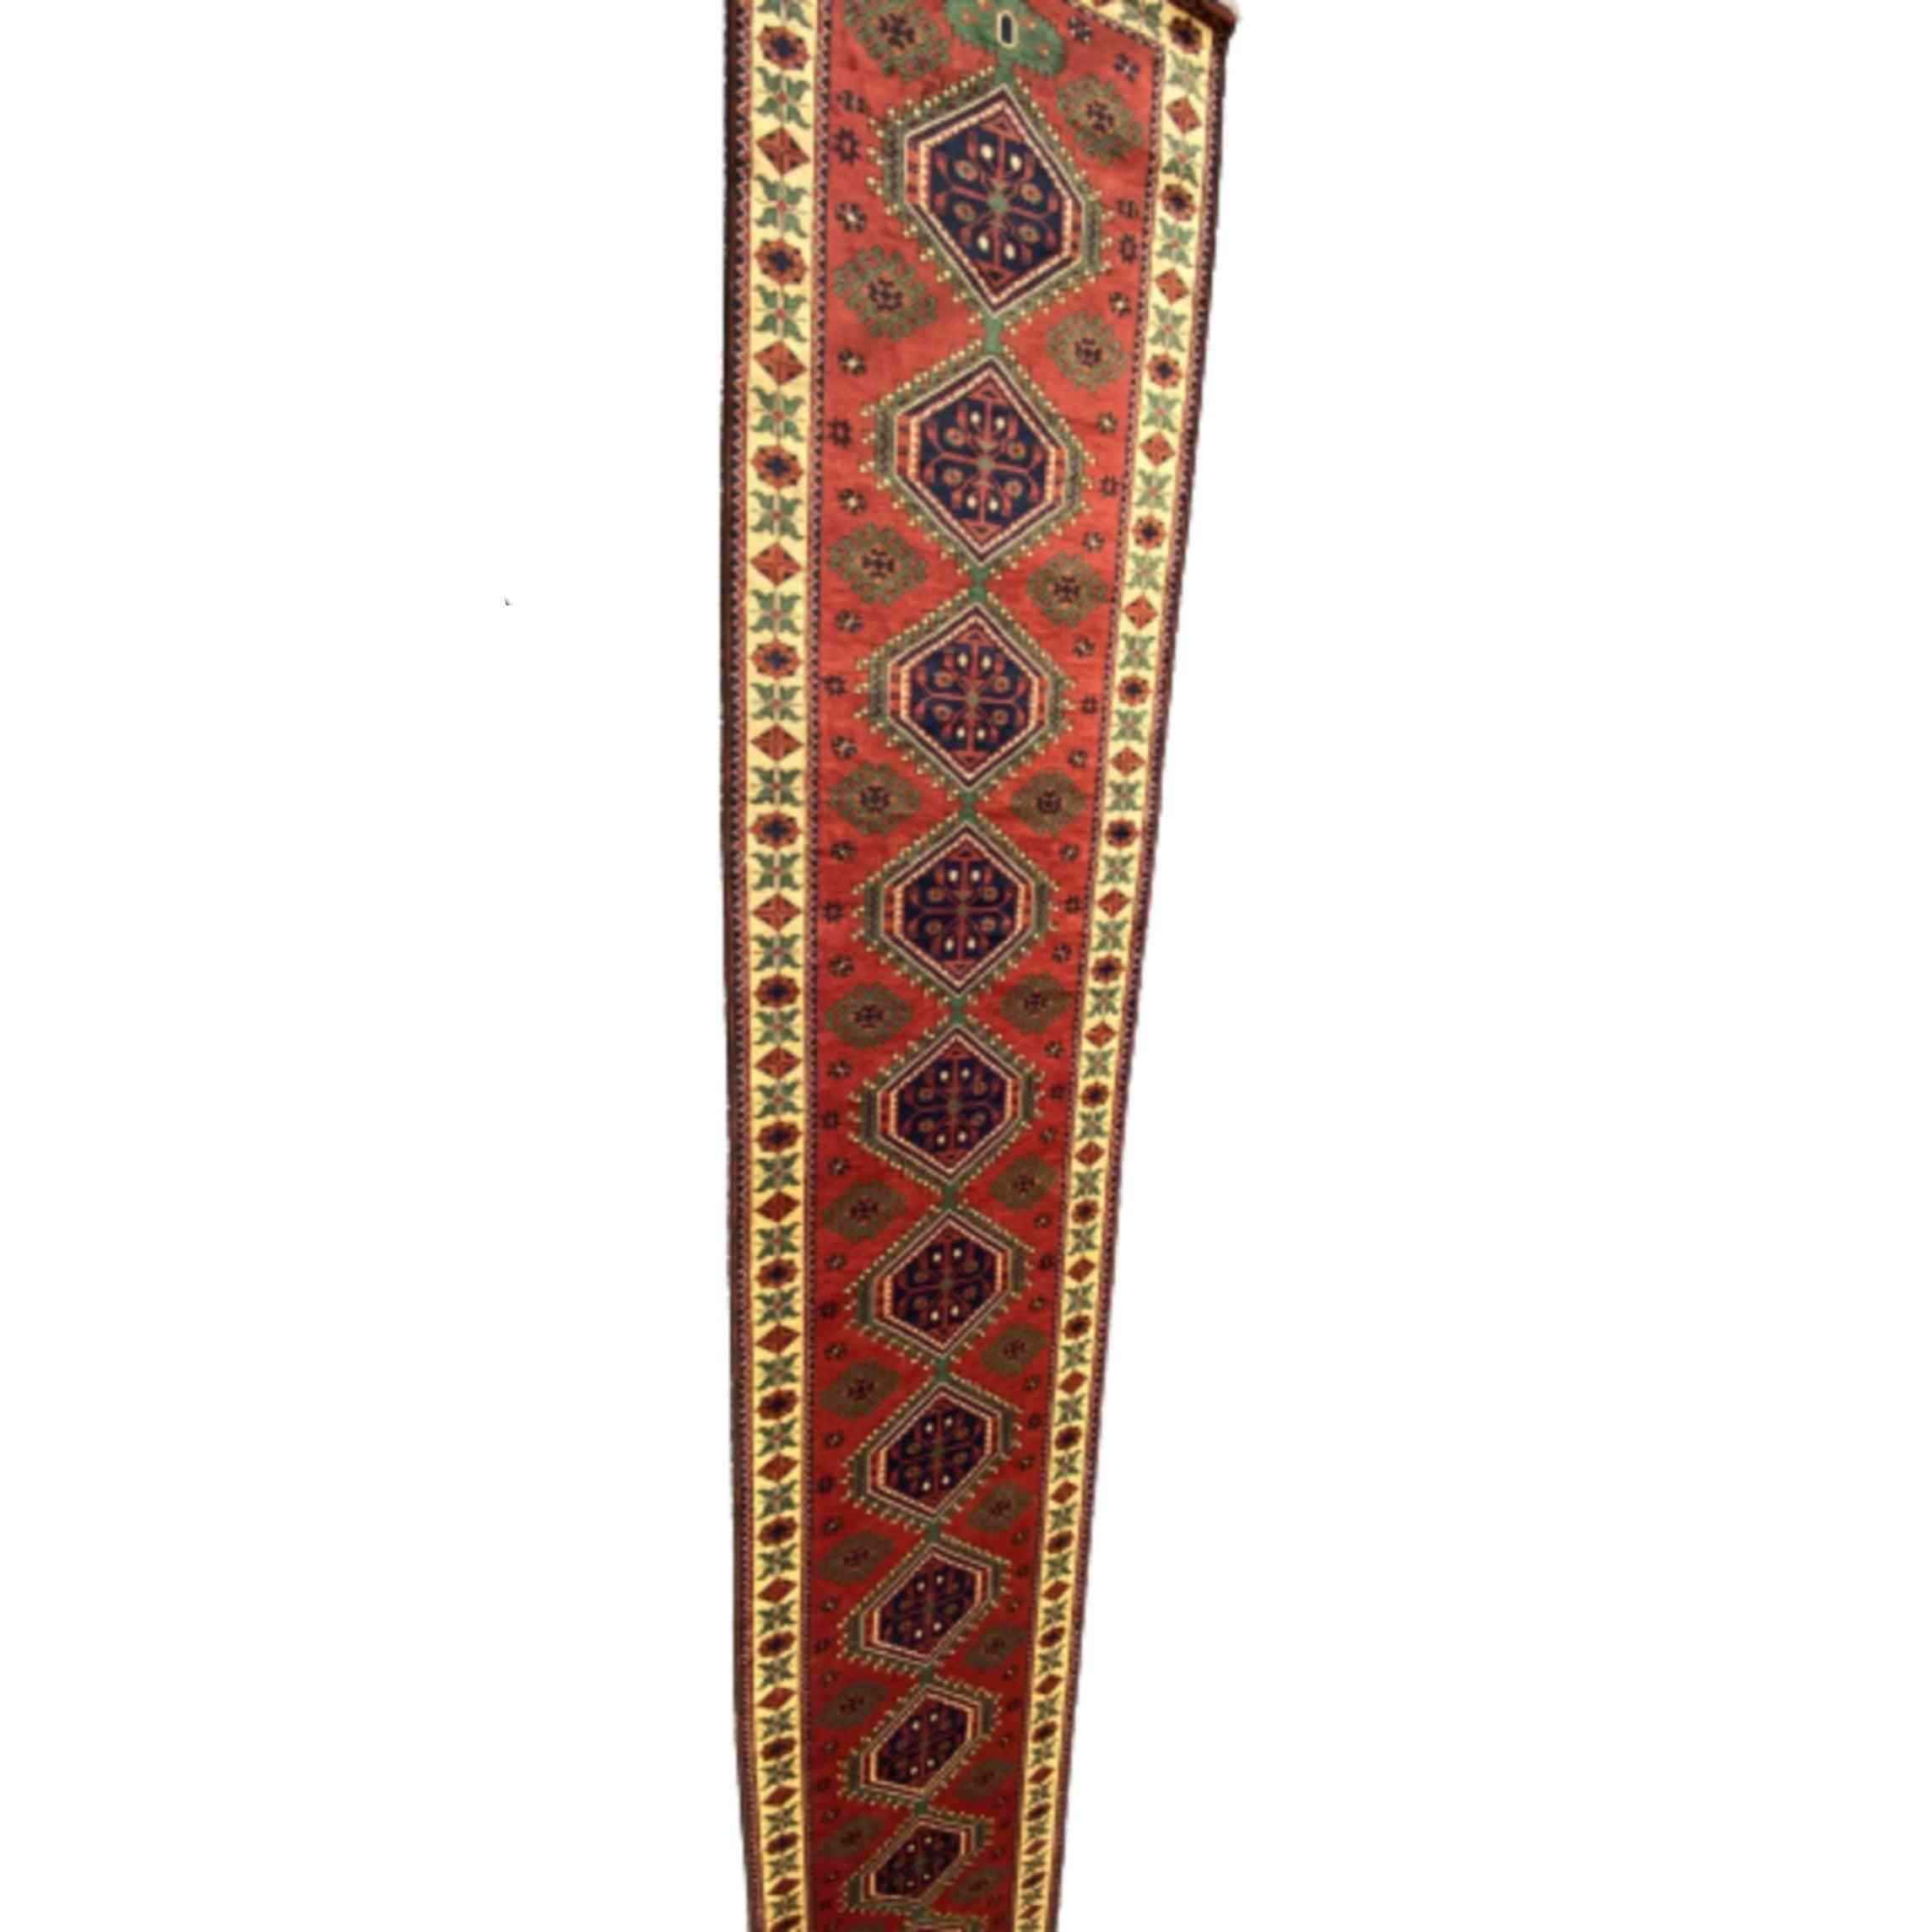 973 x 97 cm Afghan Natural Dye Tribal Red Rug - Rugmaster